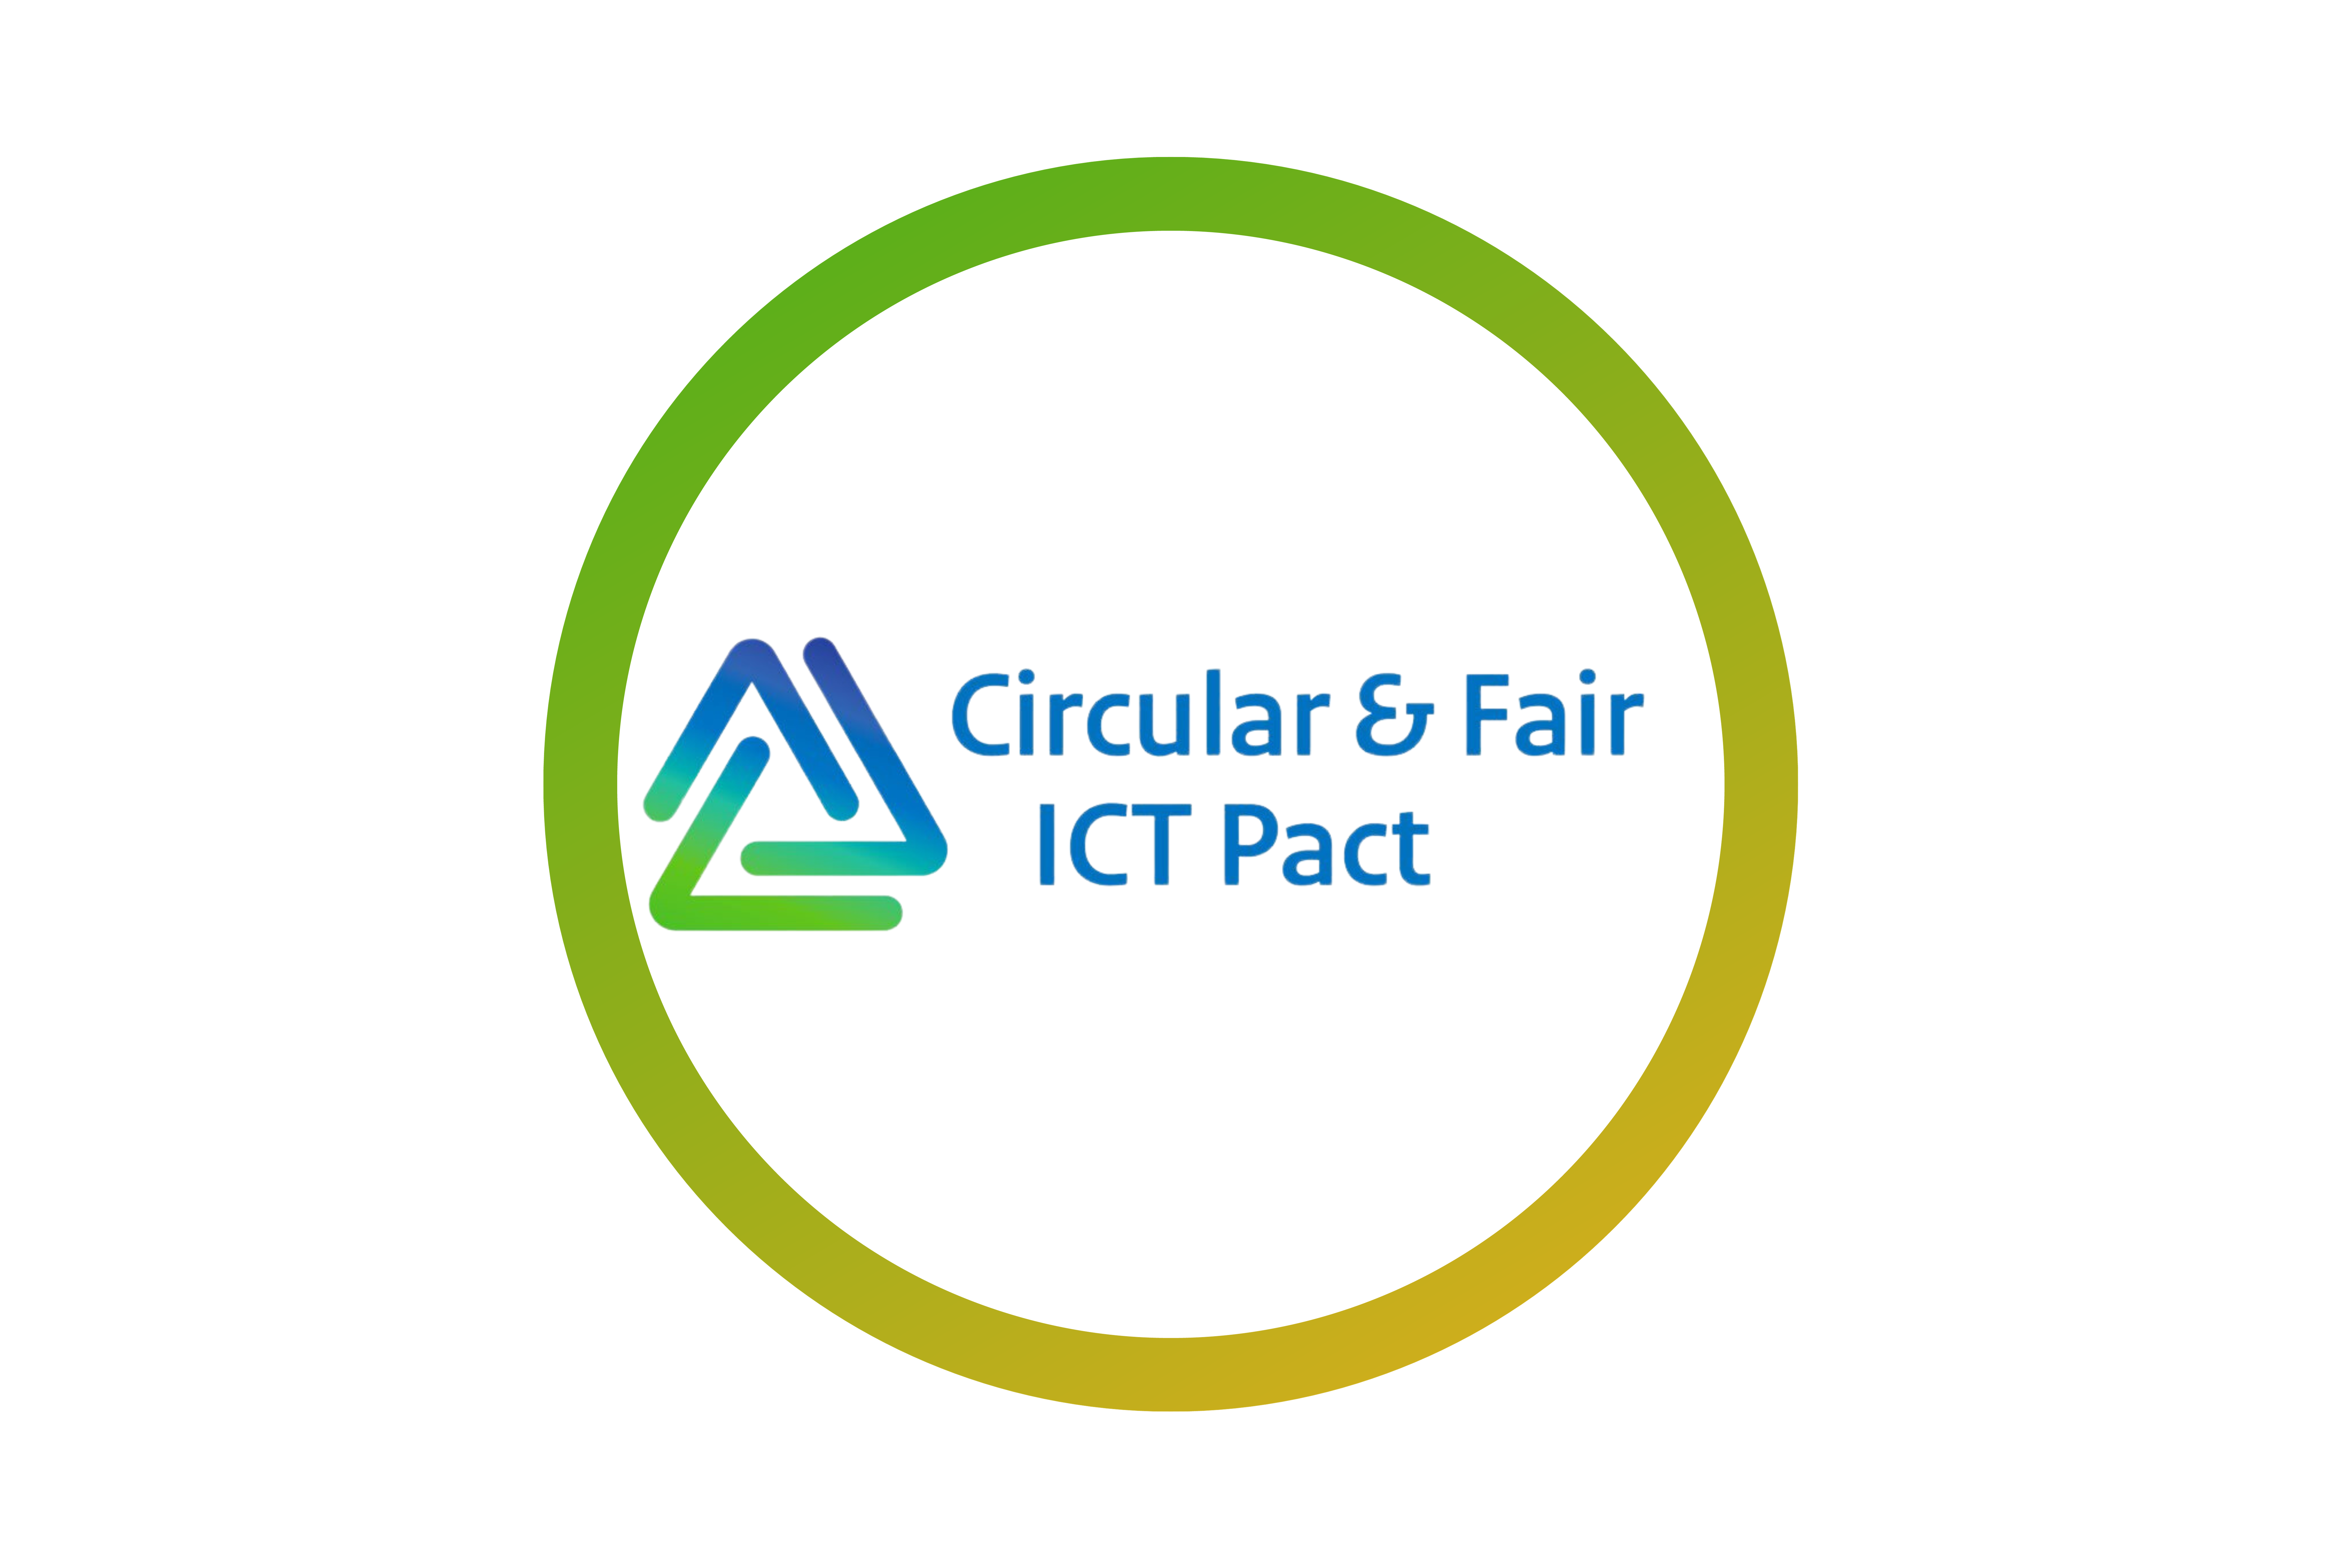 Circular and Fair ICT Pact